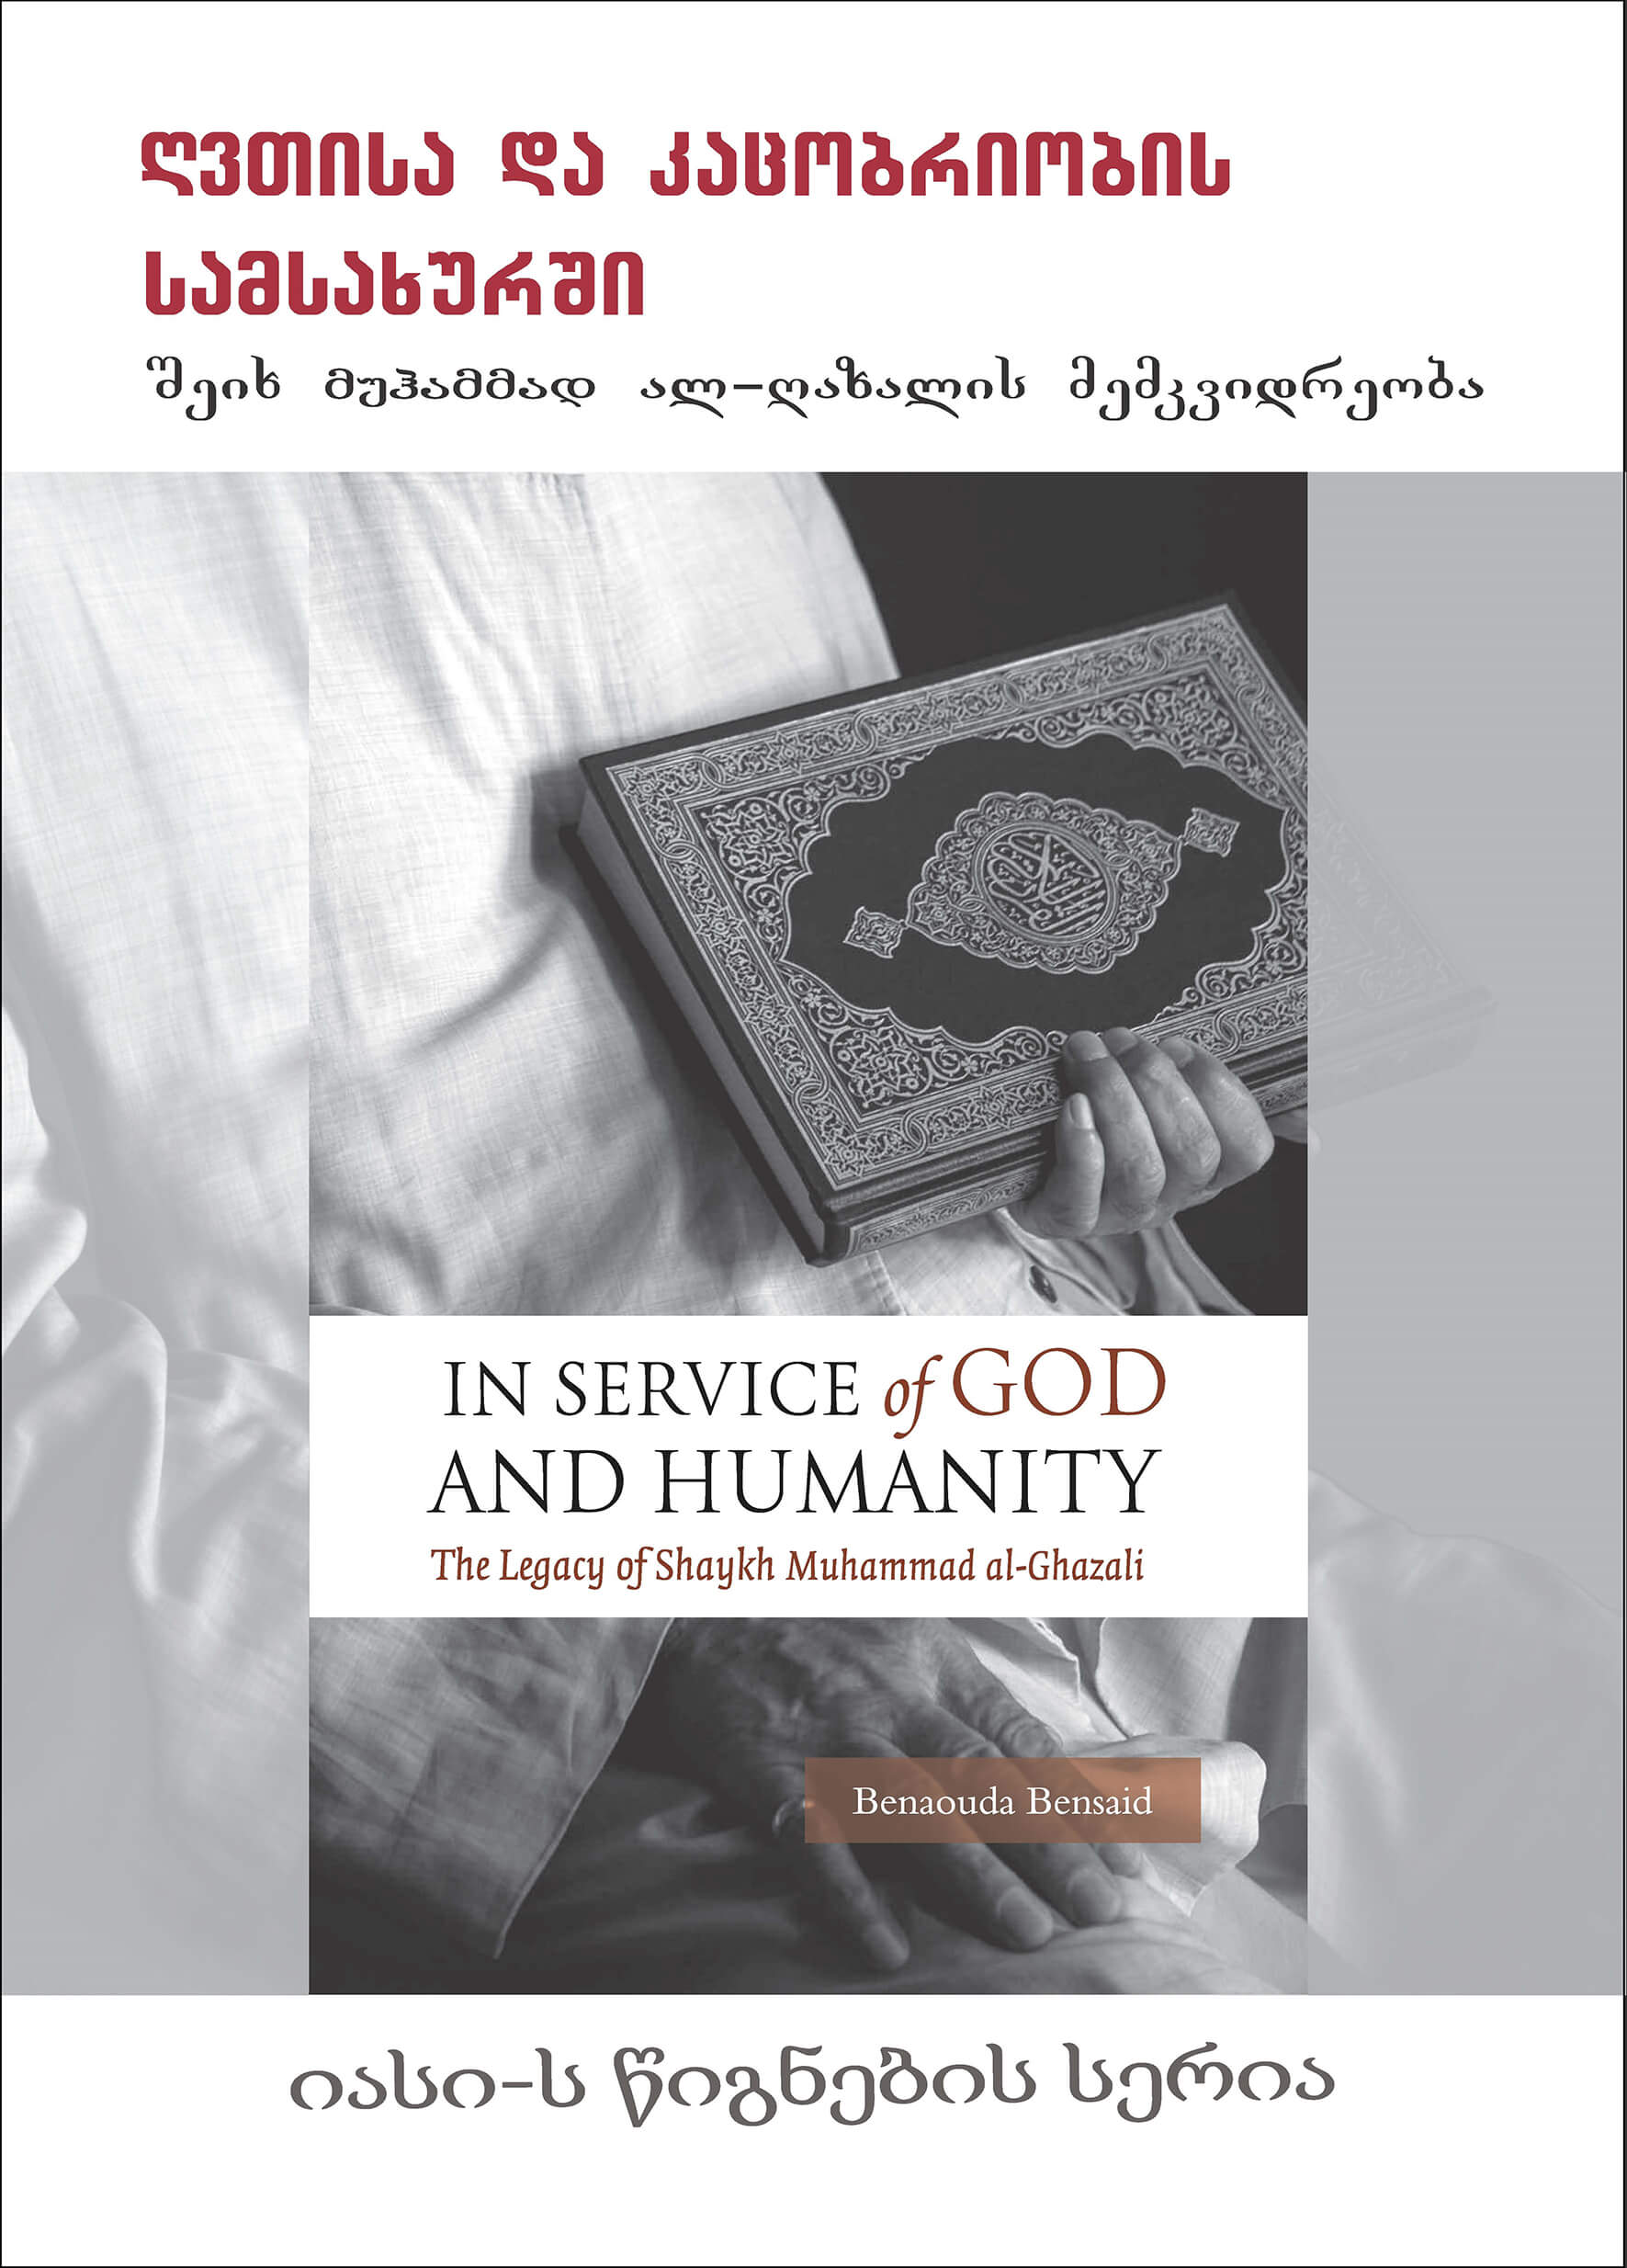 Georgian: RvTisa da kacobriobis samsaxurSi Seix muhammad al-Razalis memkvidreoba (Book-in-Brief: In Service of God and Humanity: The Legacy of Shaykh Muhammad al-Ghazali)